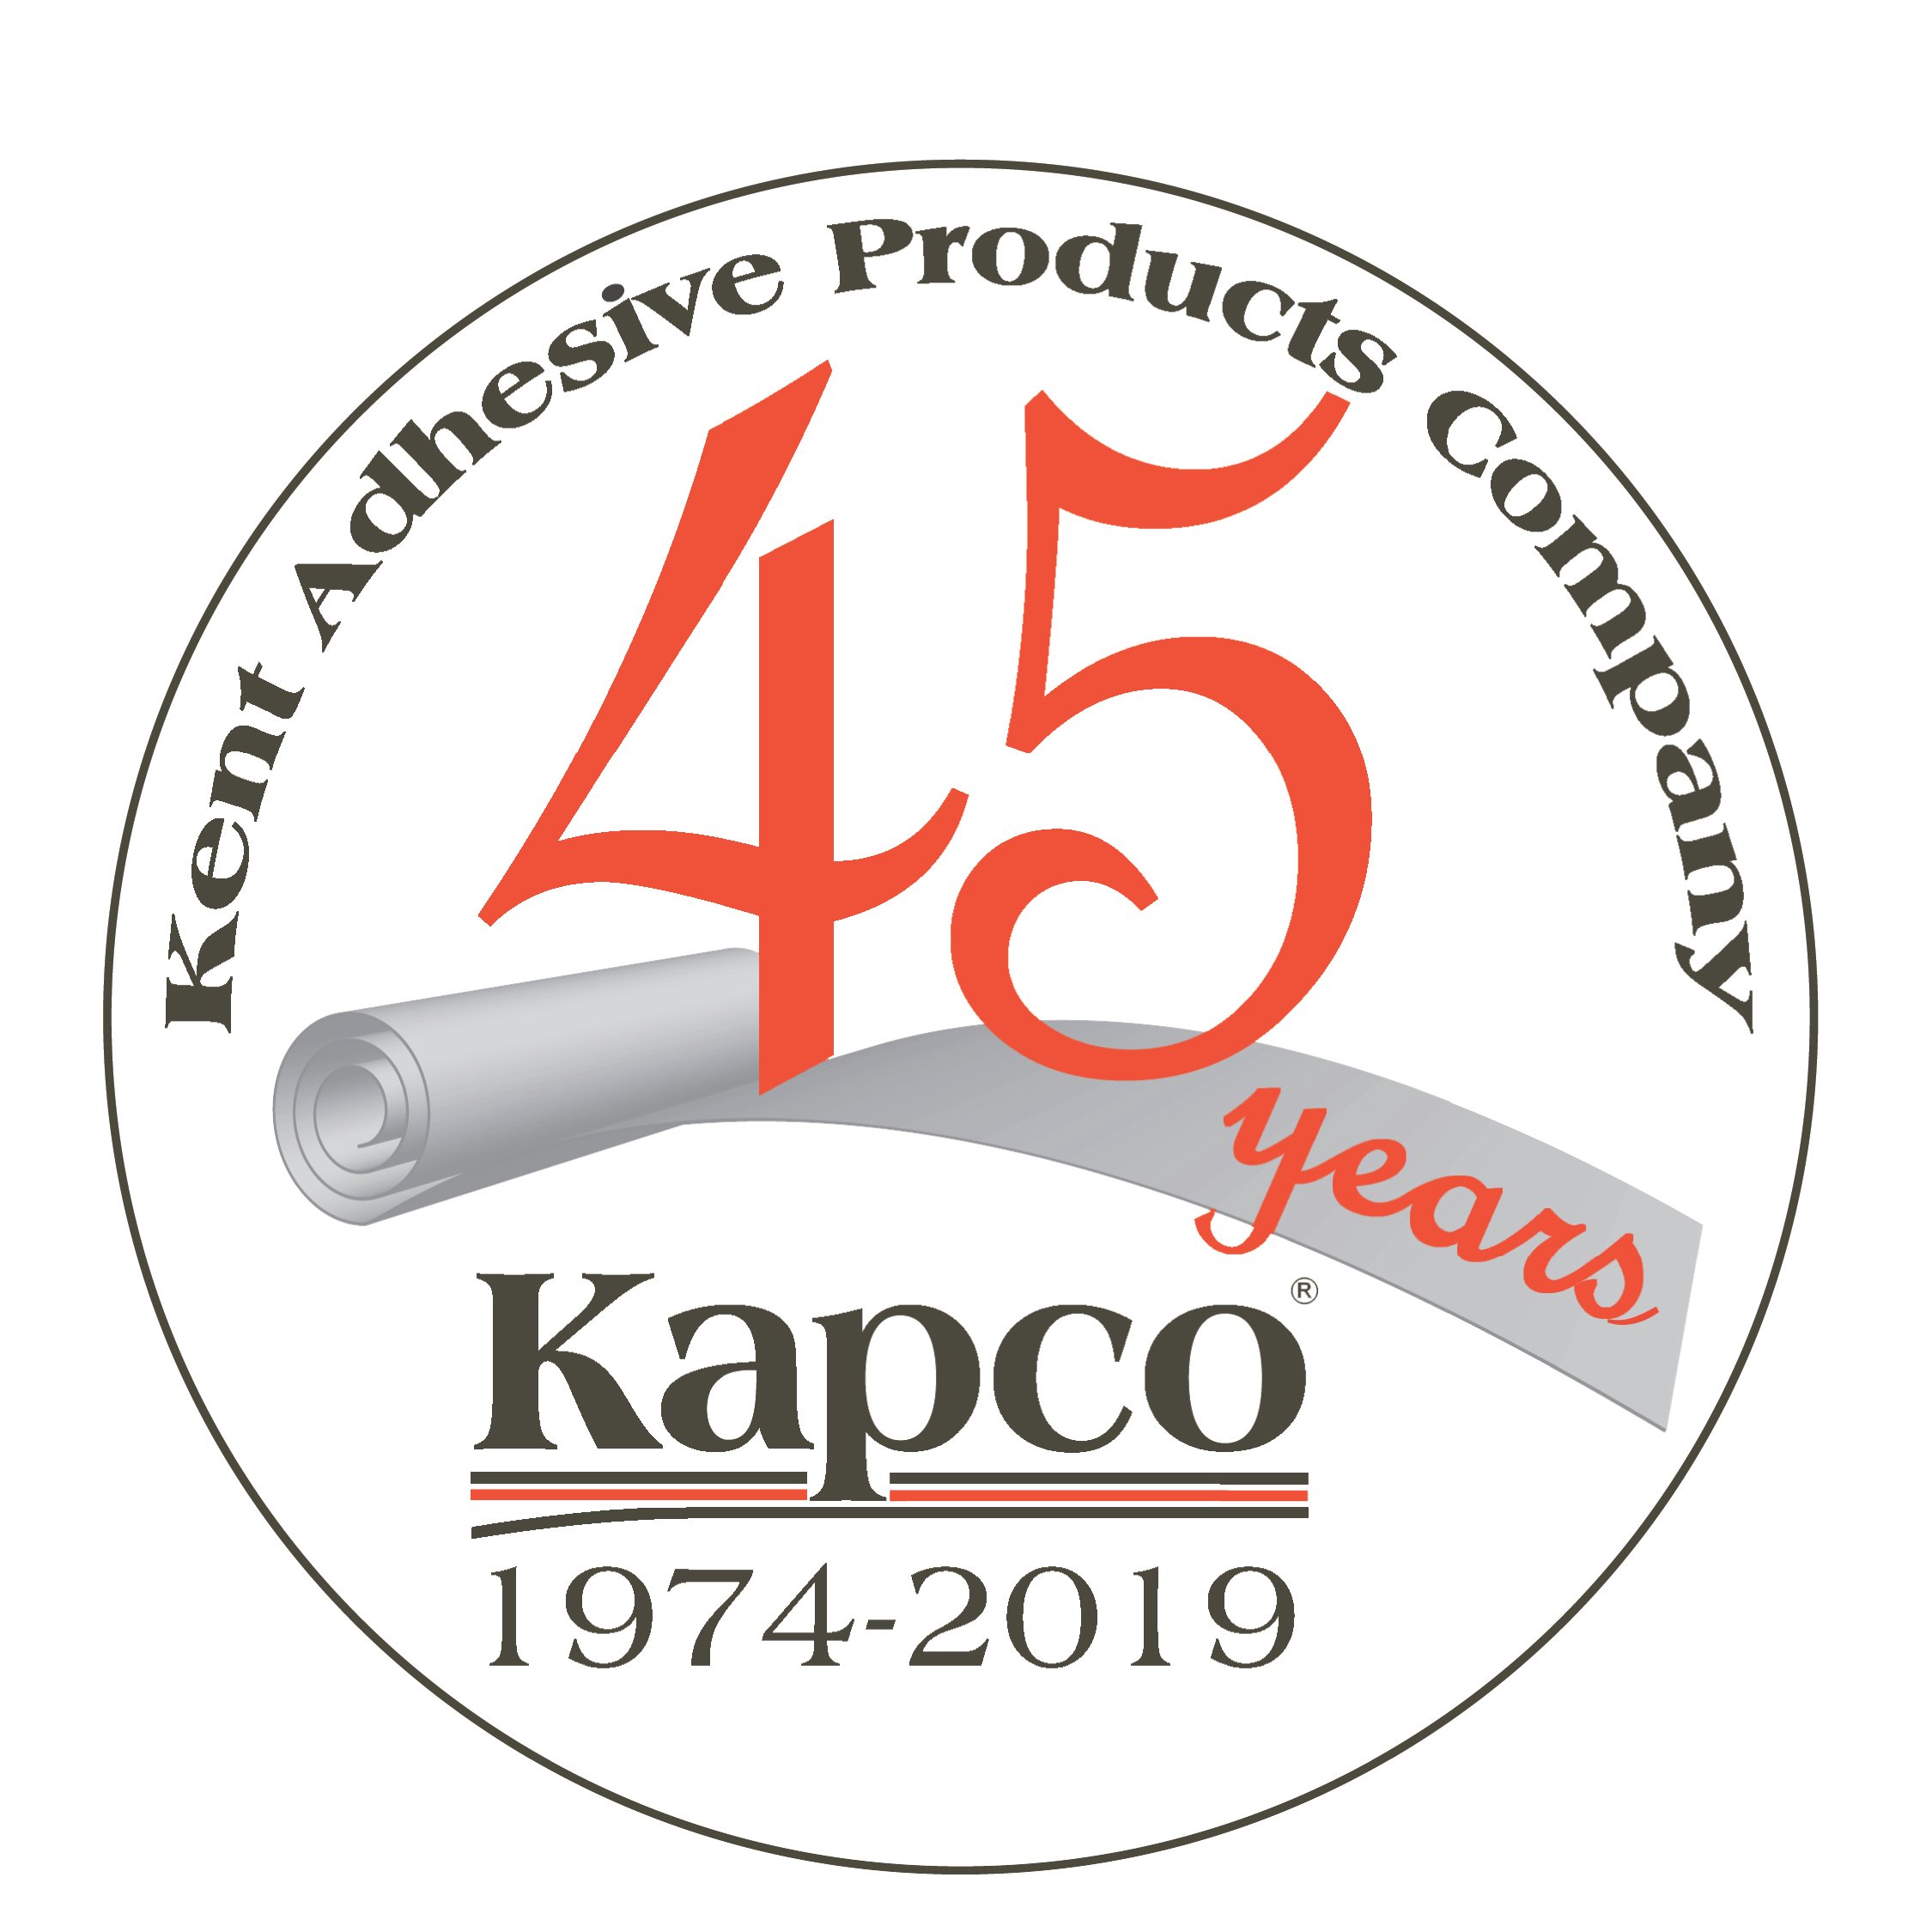 Kapco logo